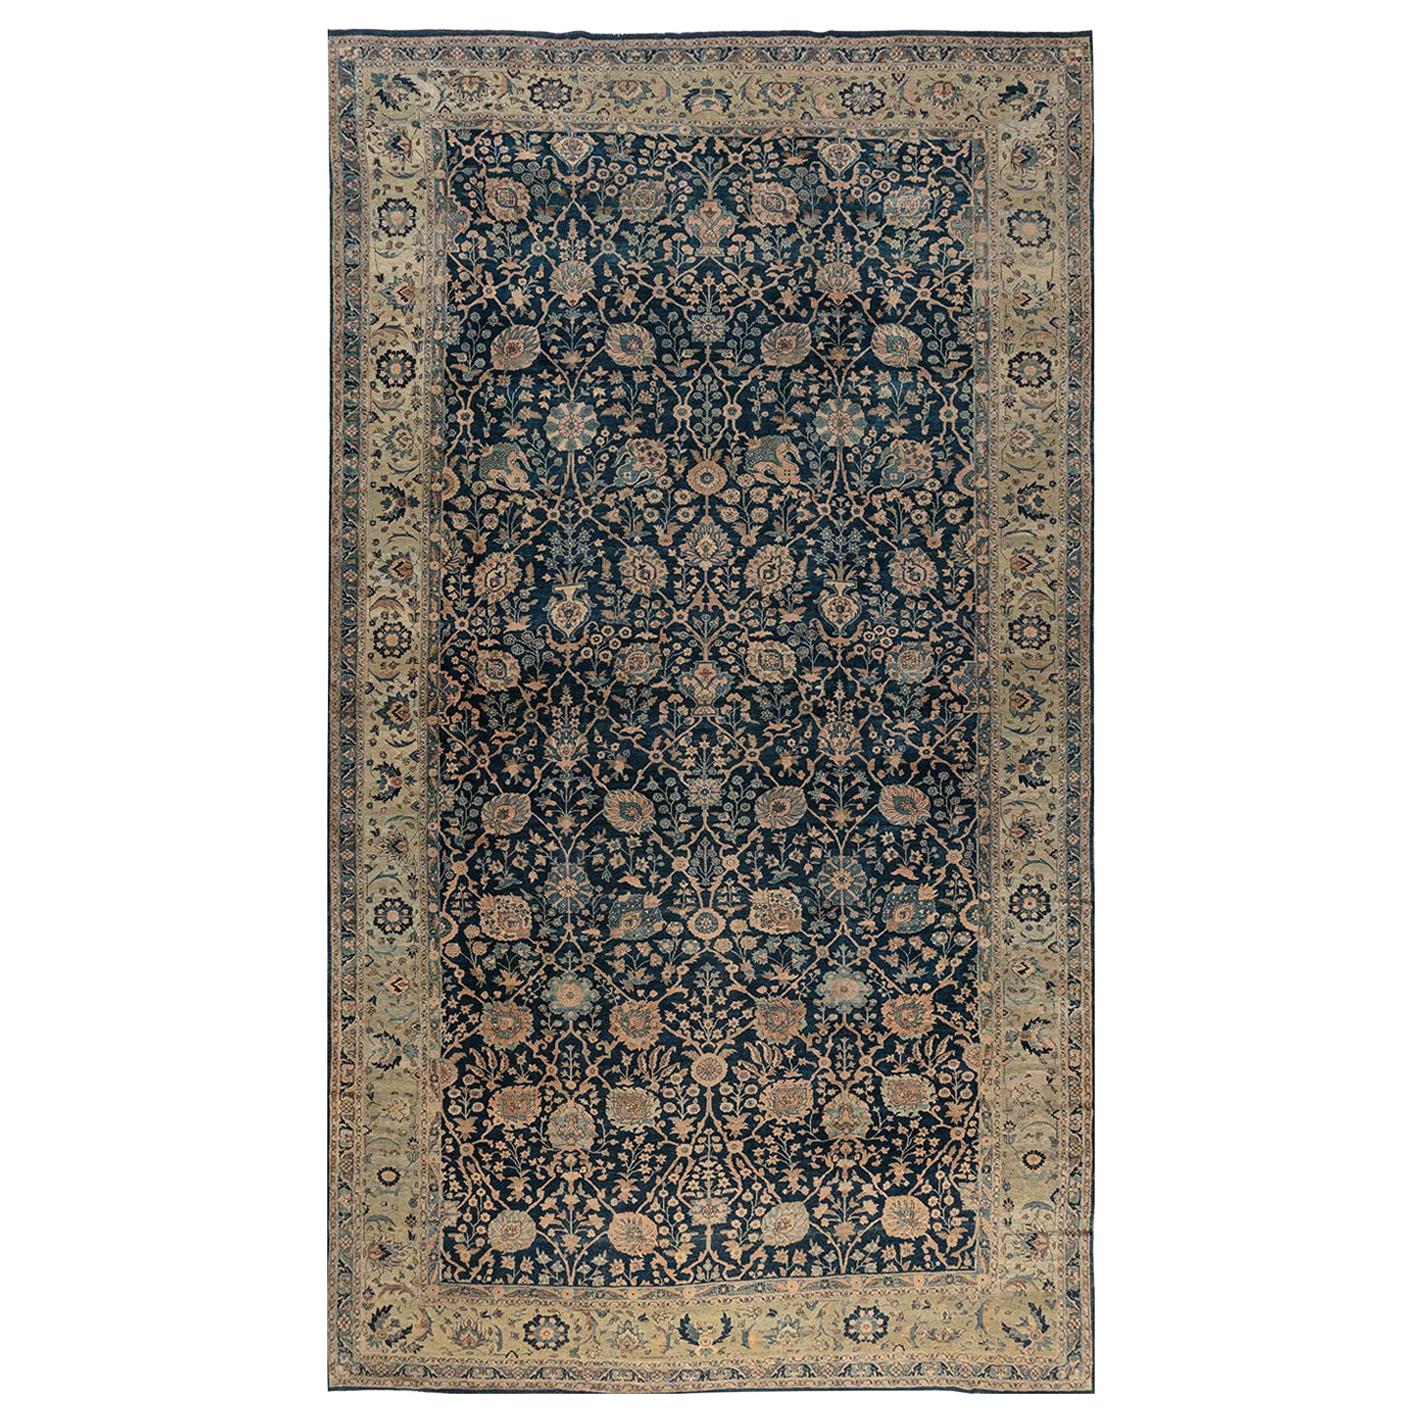 19th Century Persian Tabriz Handmade Wool Carpet